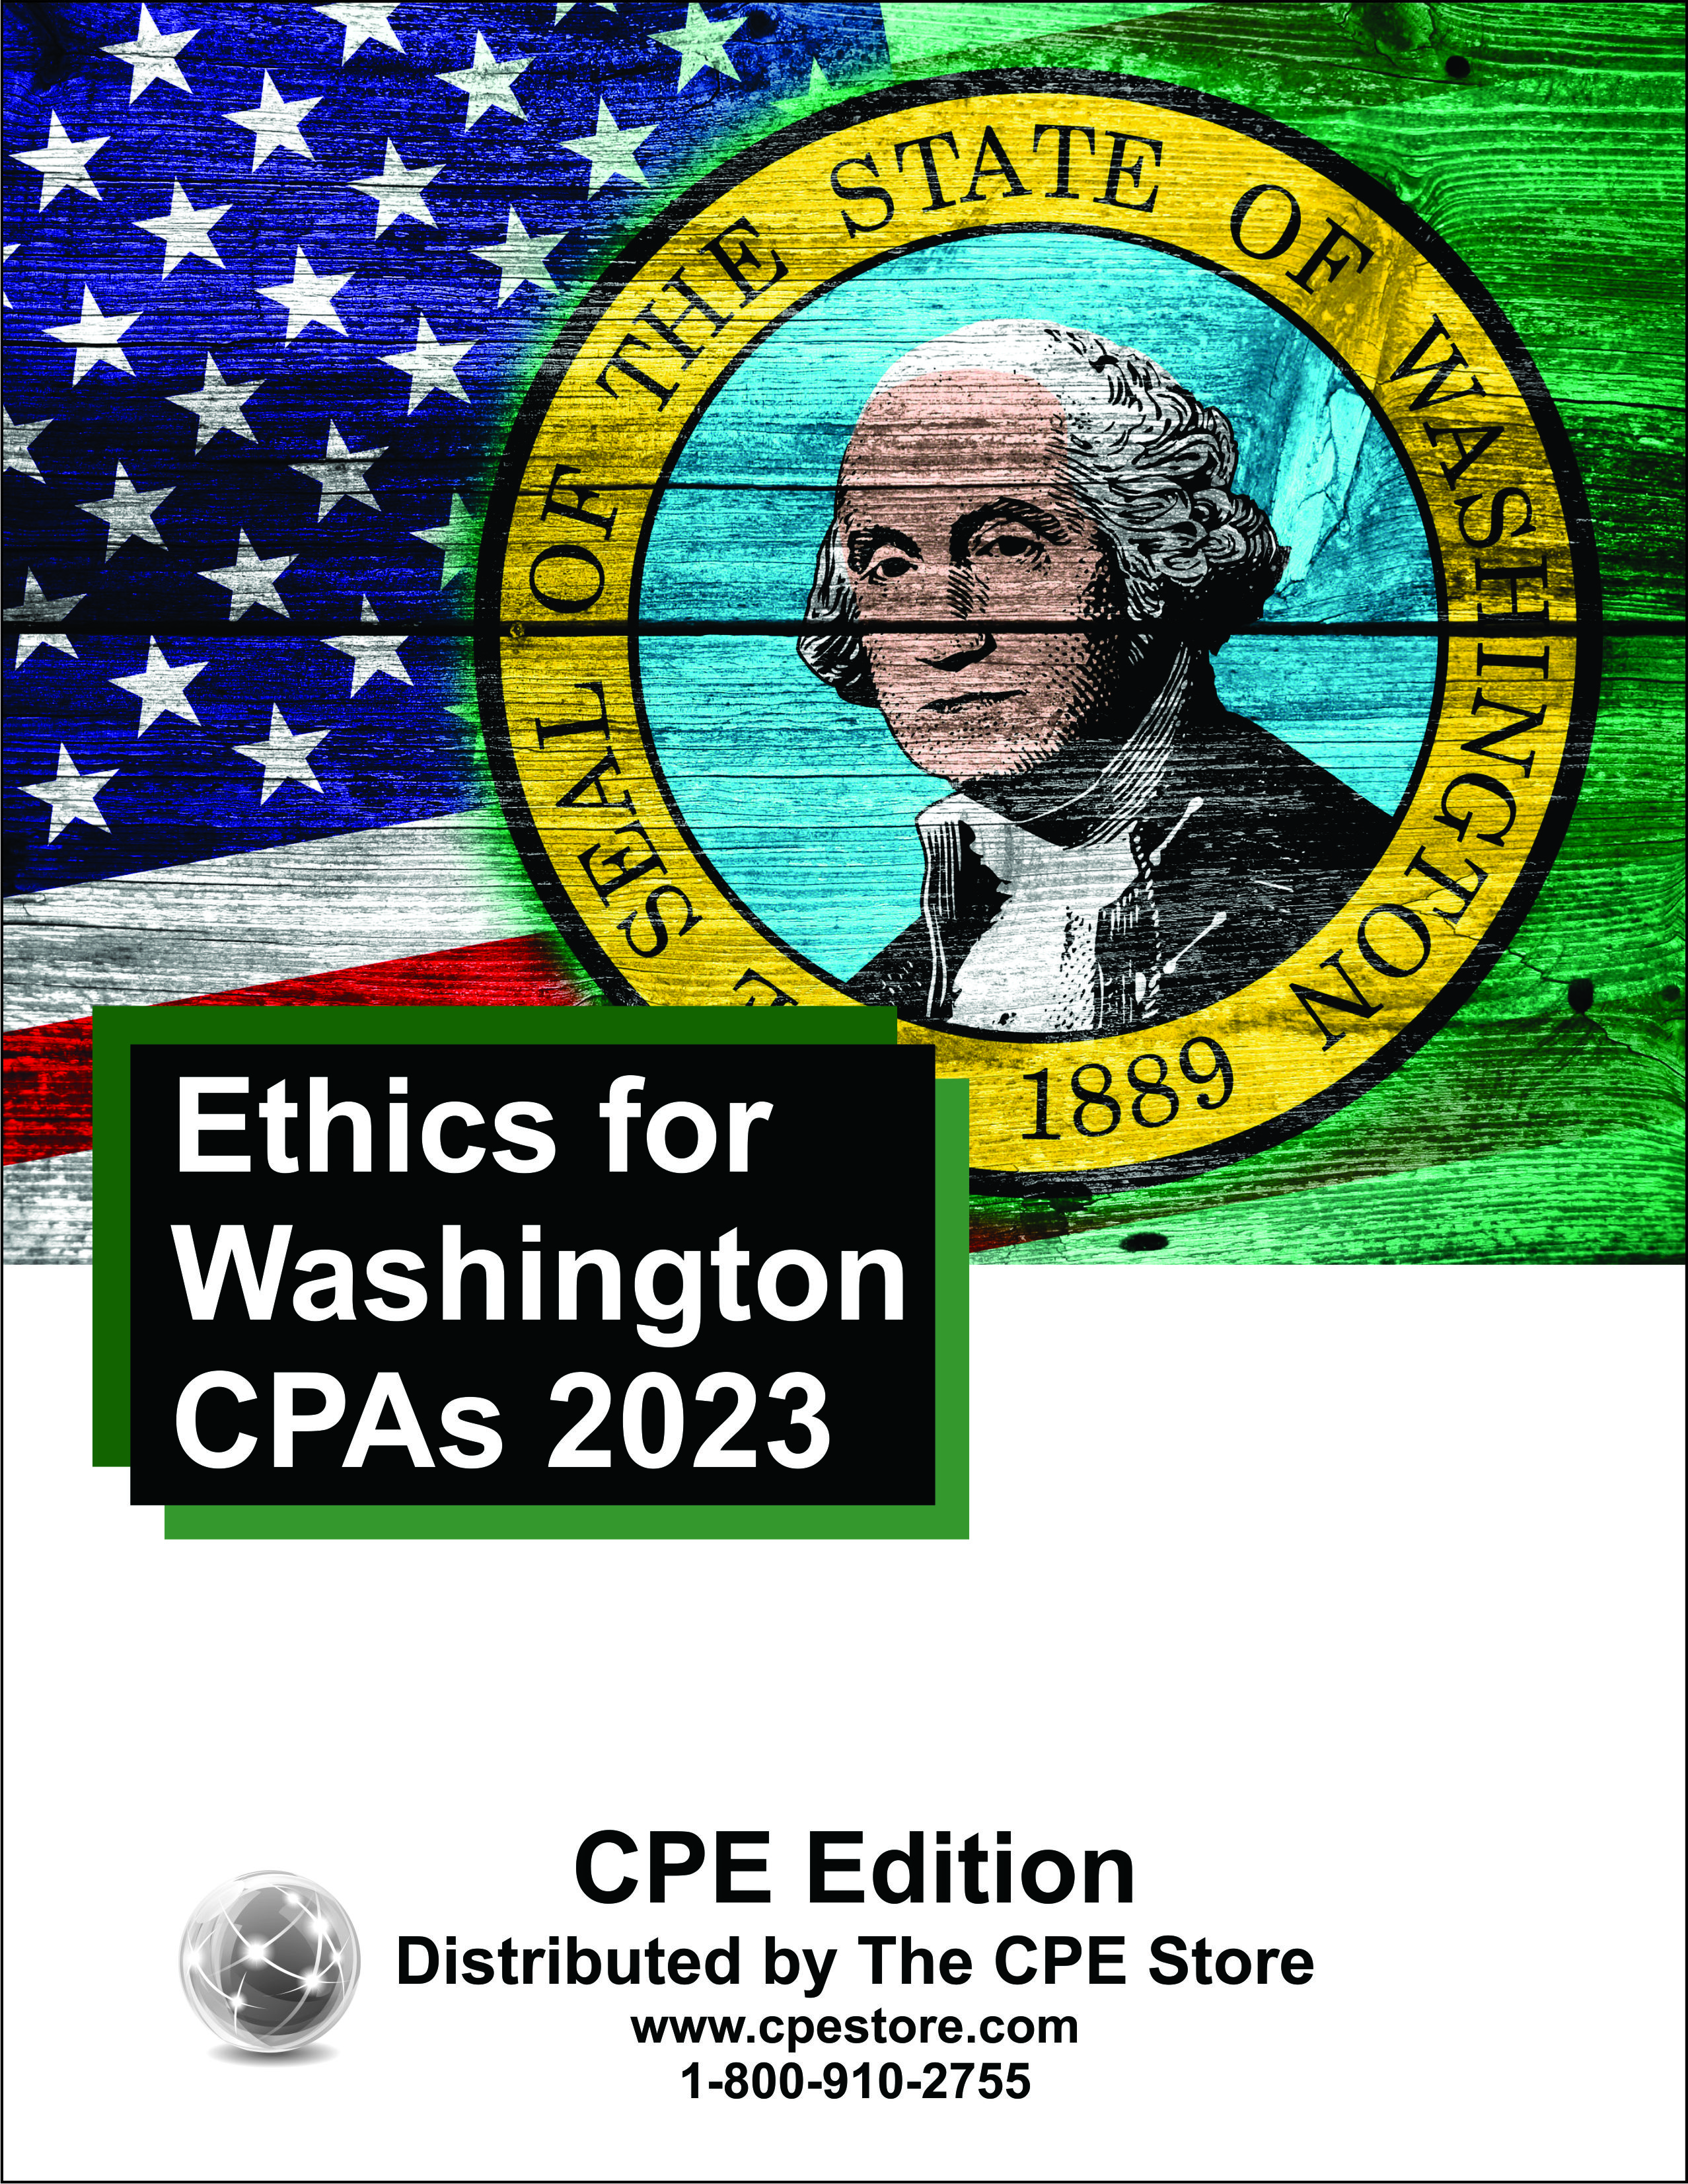 Ethics for Washington CPAs 2023